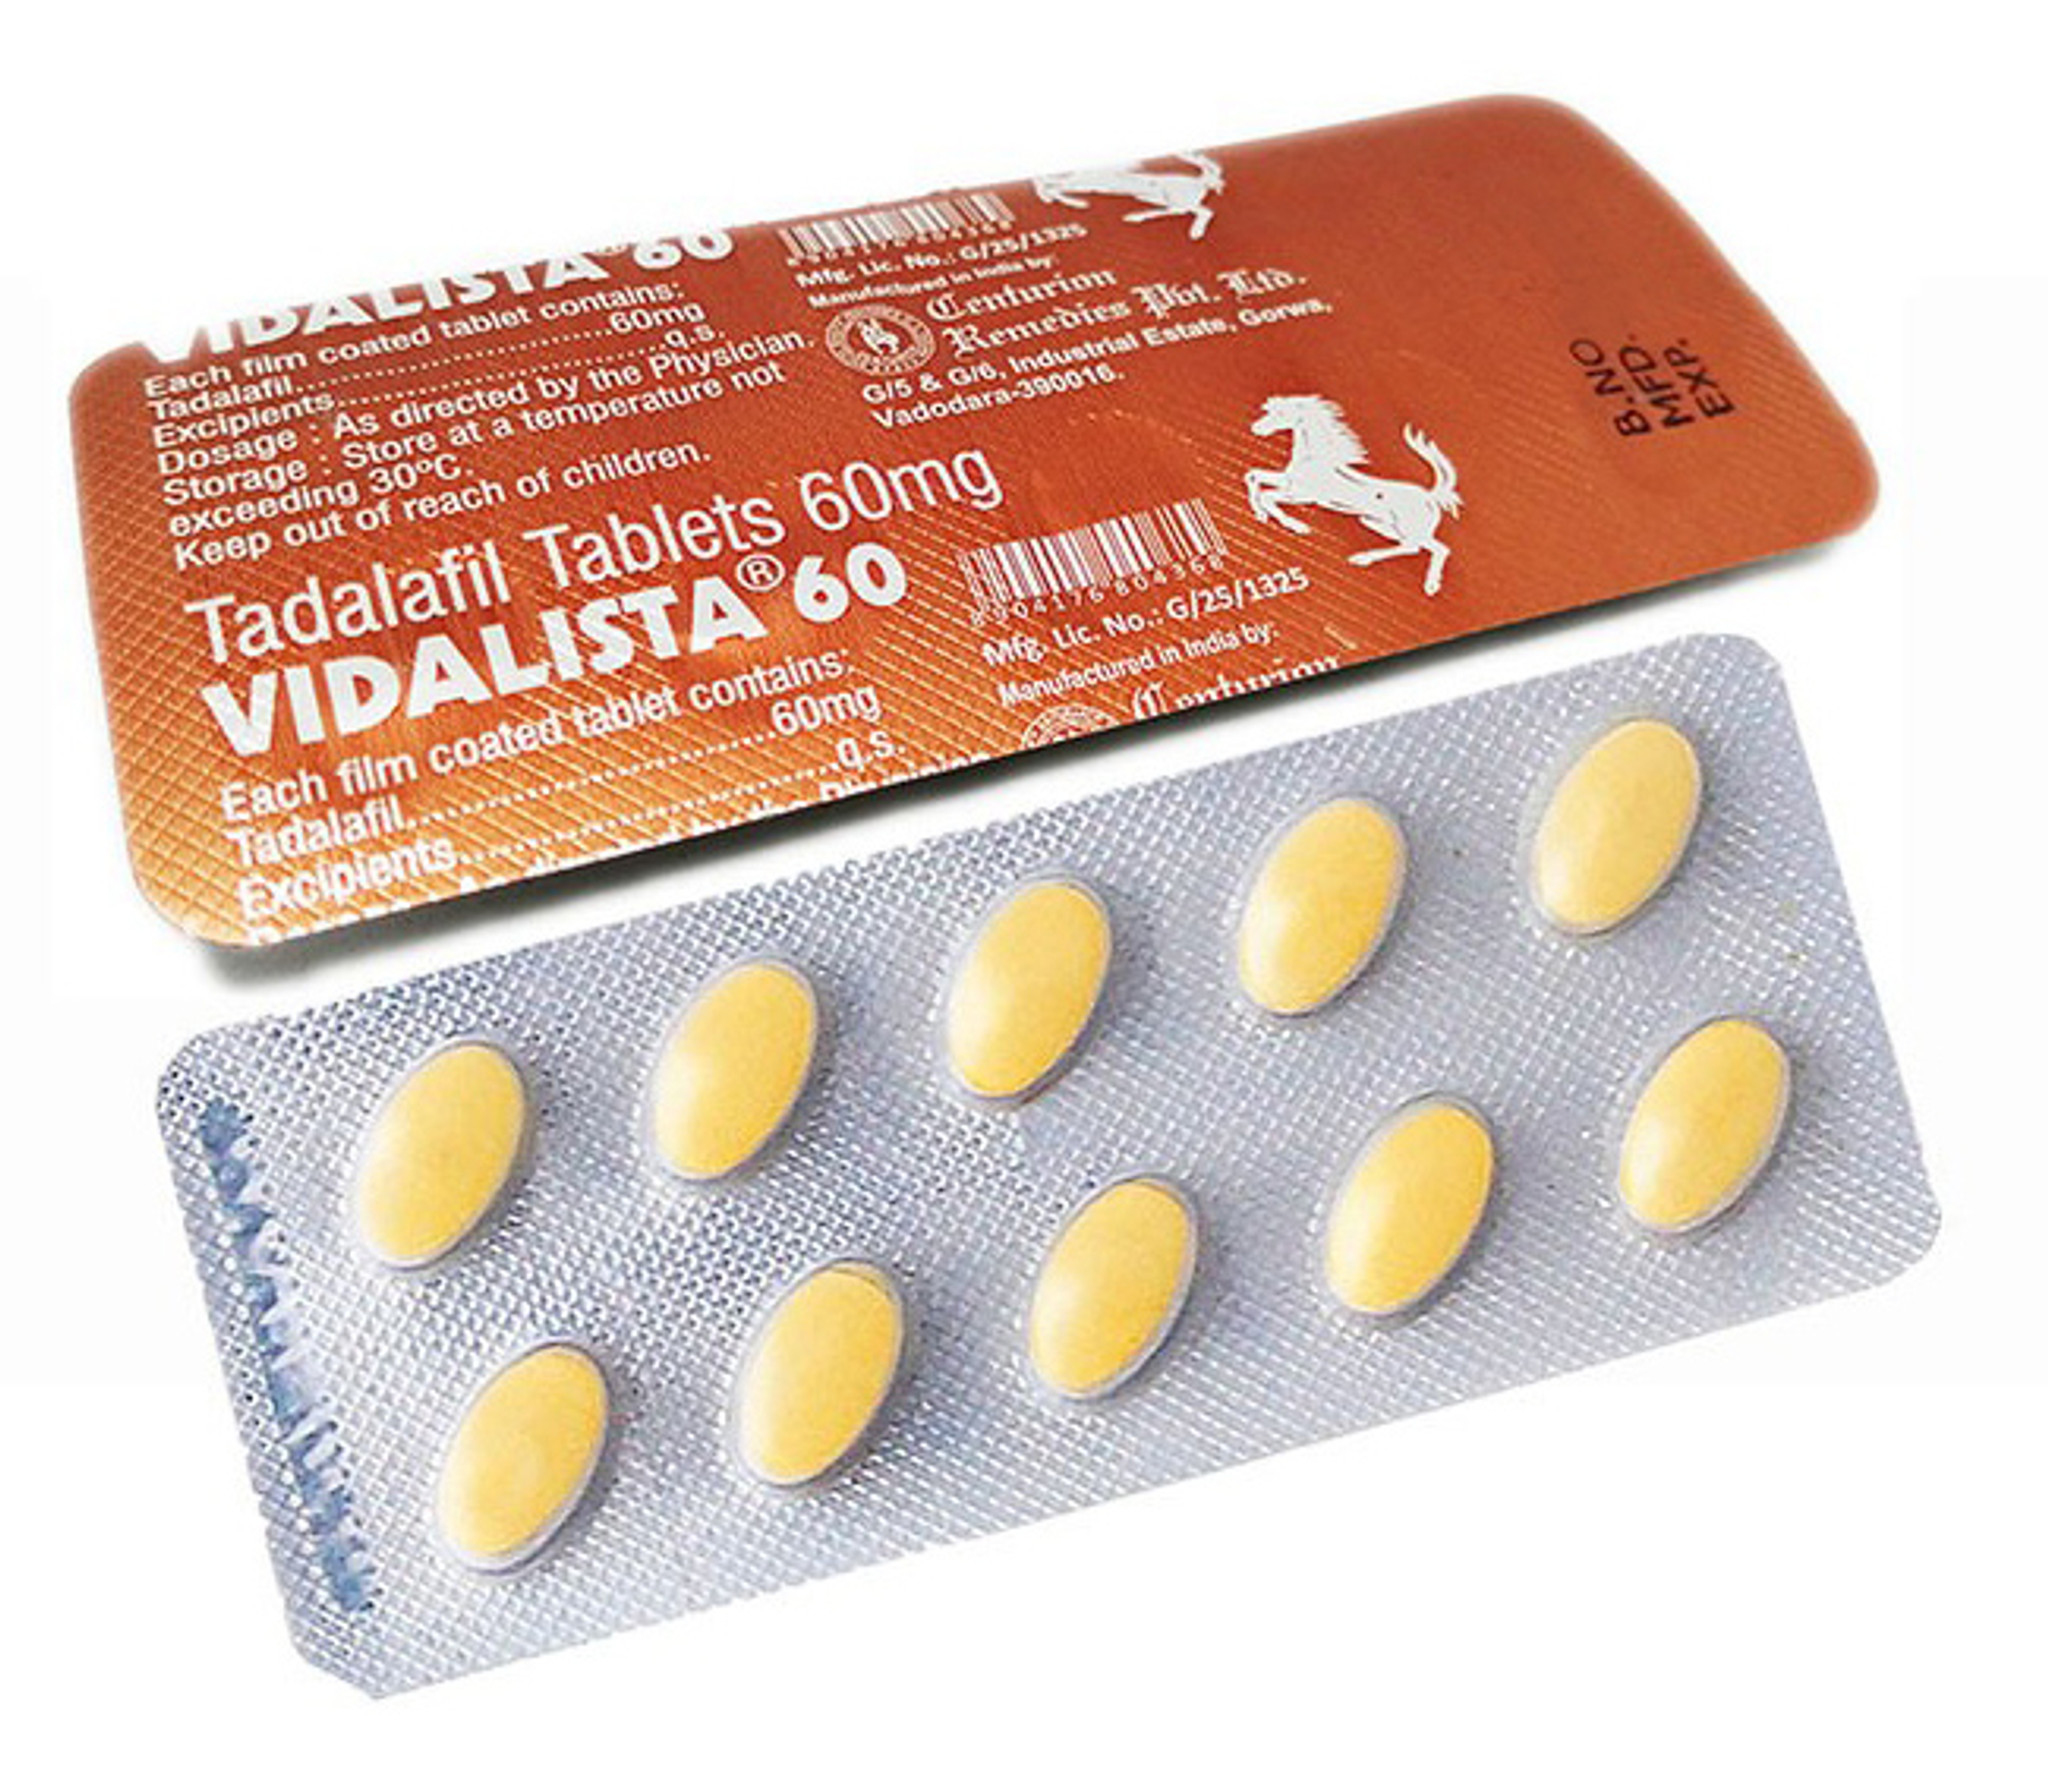 Vidalista 60 mg | Tadalafil | Best Price | Uses | benefits